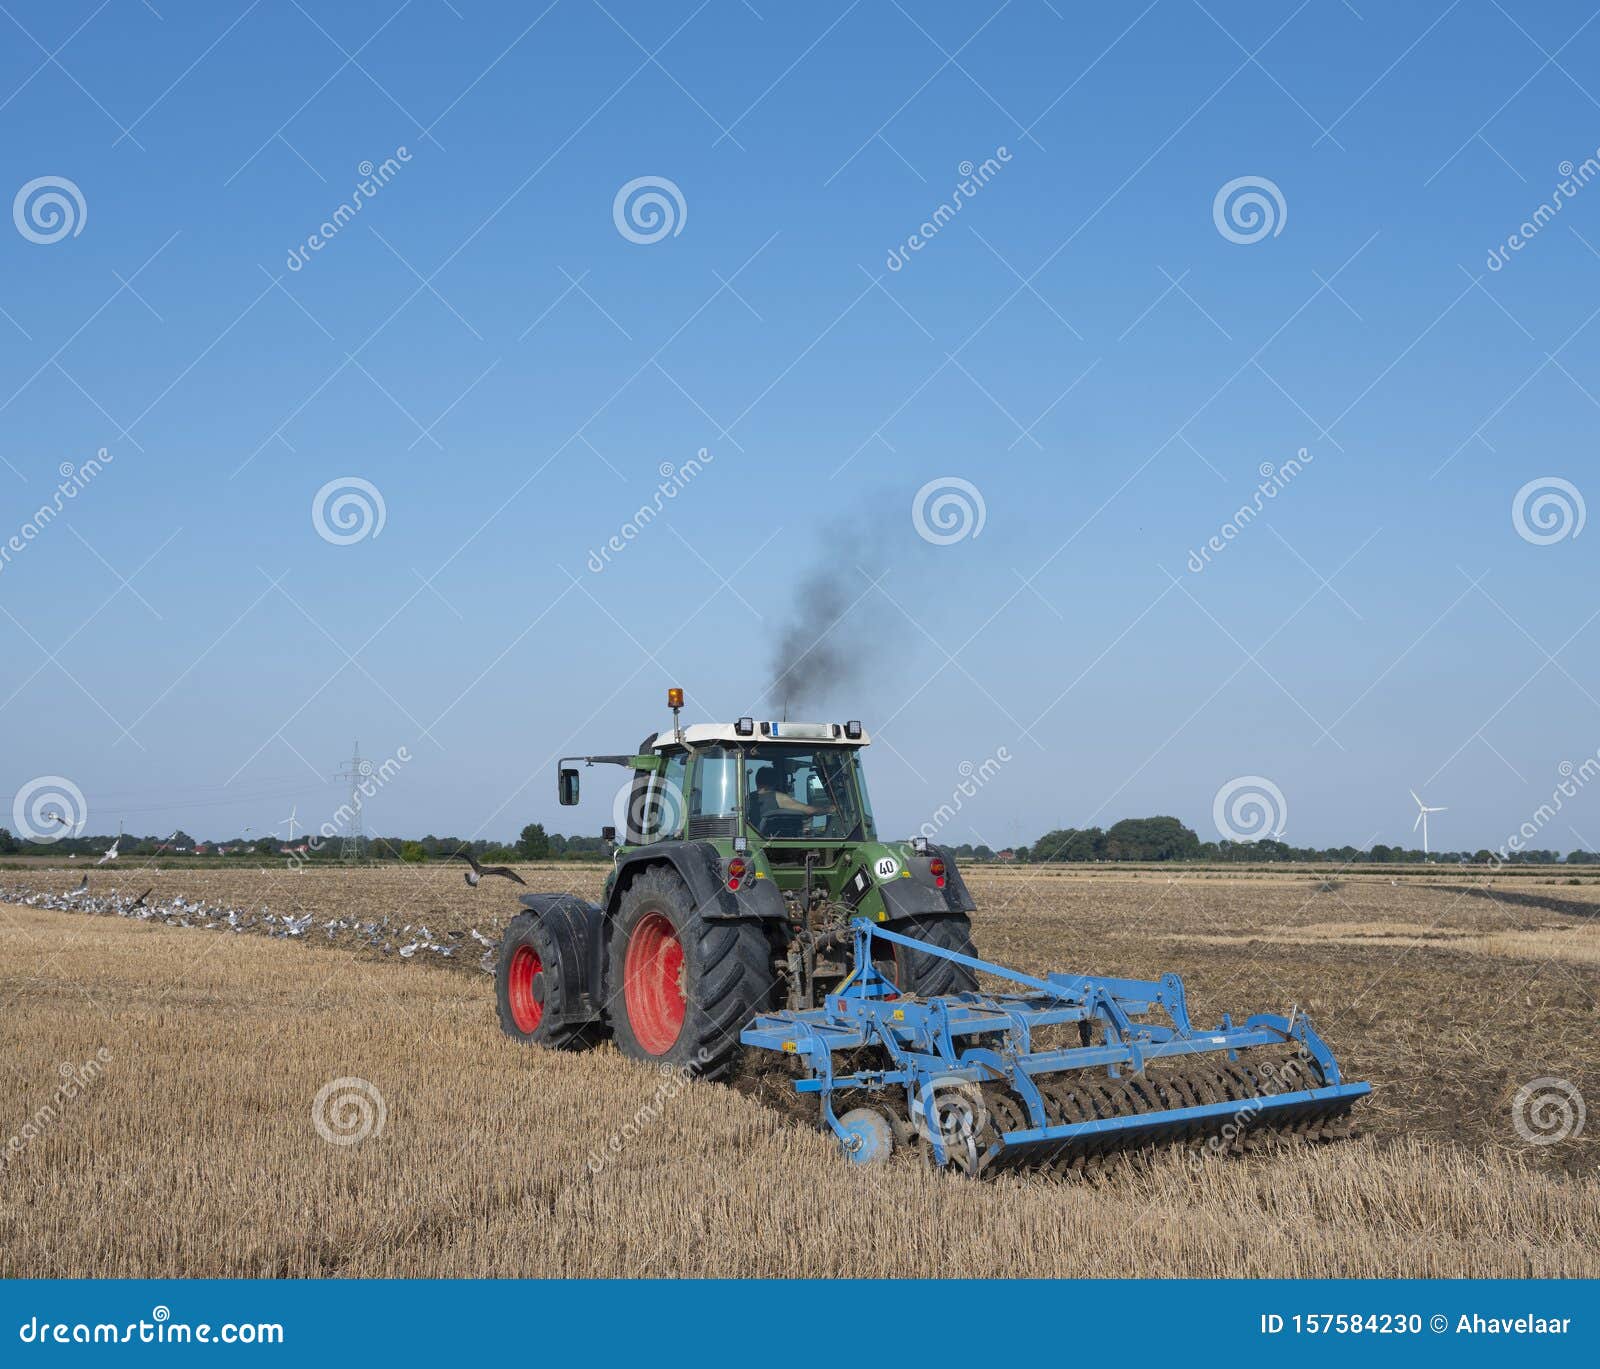 tractor with plow in summer field under blue sky near aurich in germany